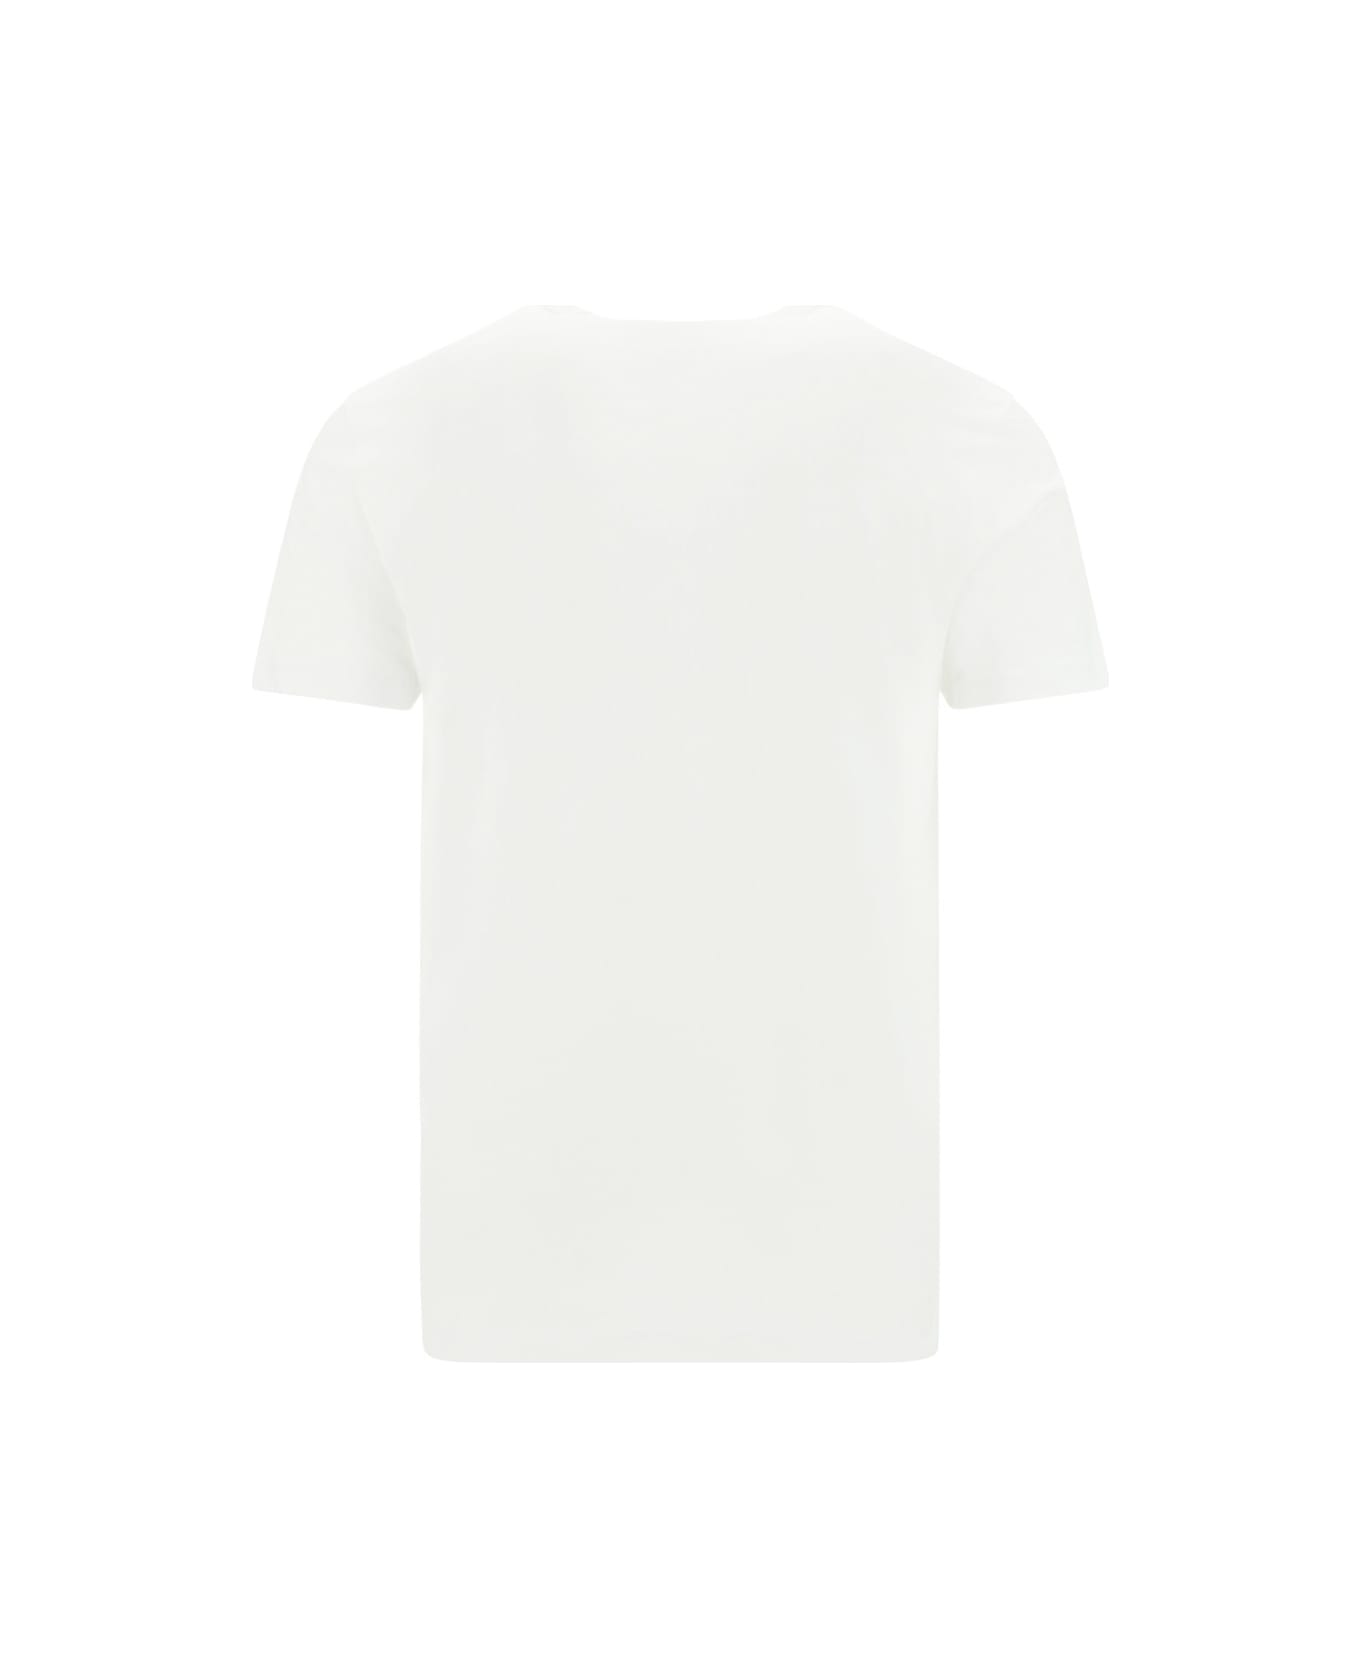 Belstaff Signature T-shirt - White シャツ